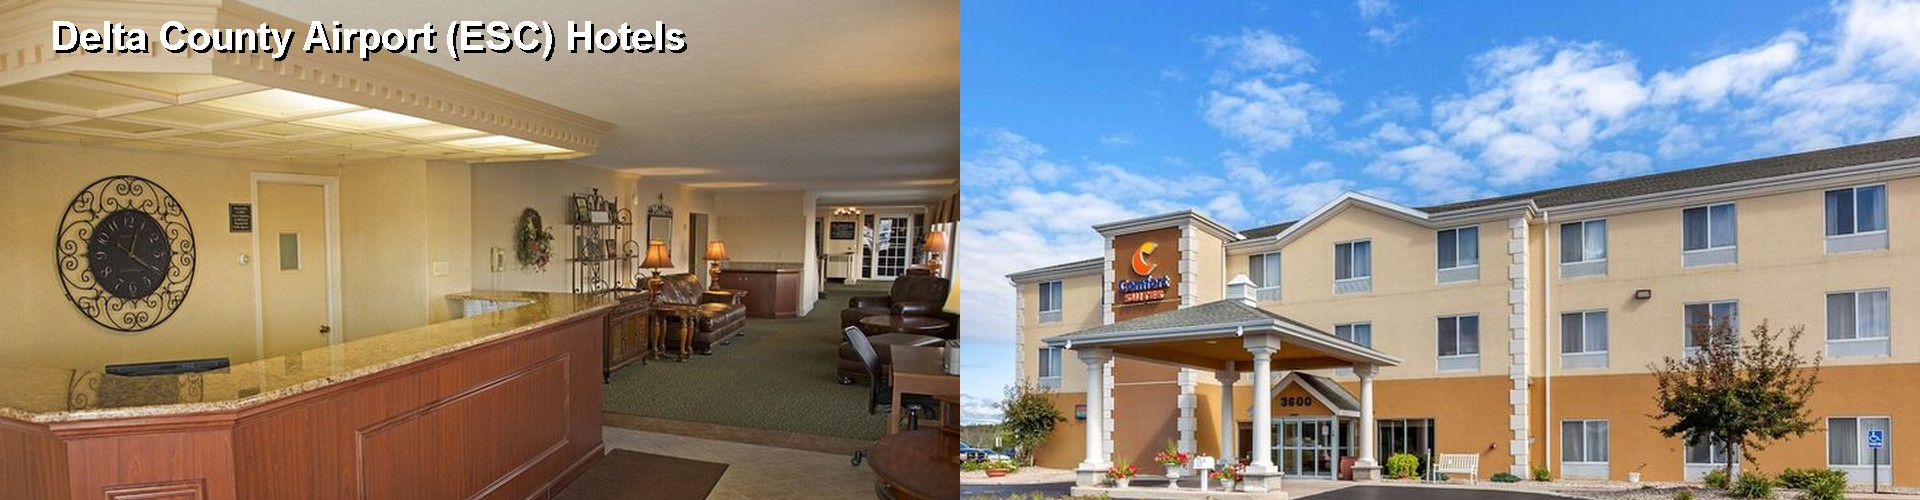 3 Best Hotels near Delta County Airport (ESC)